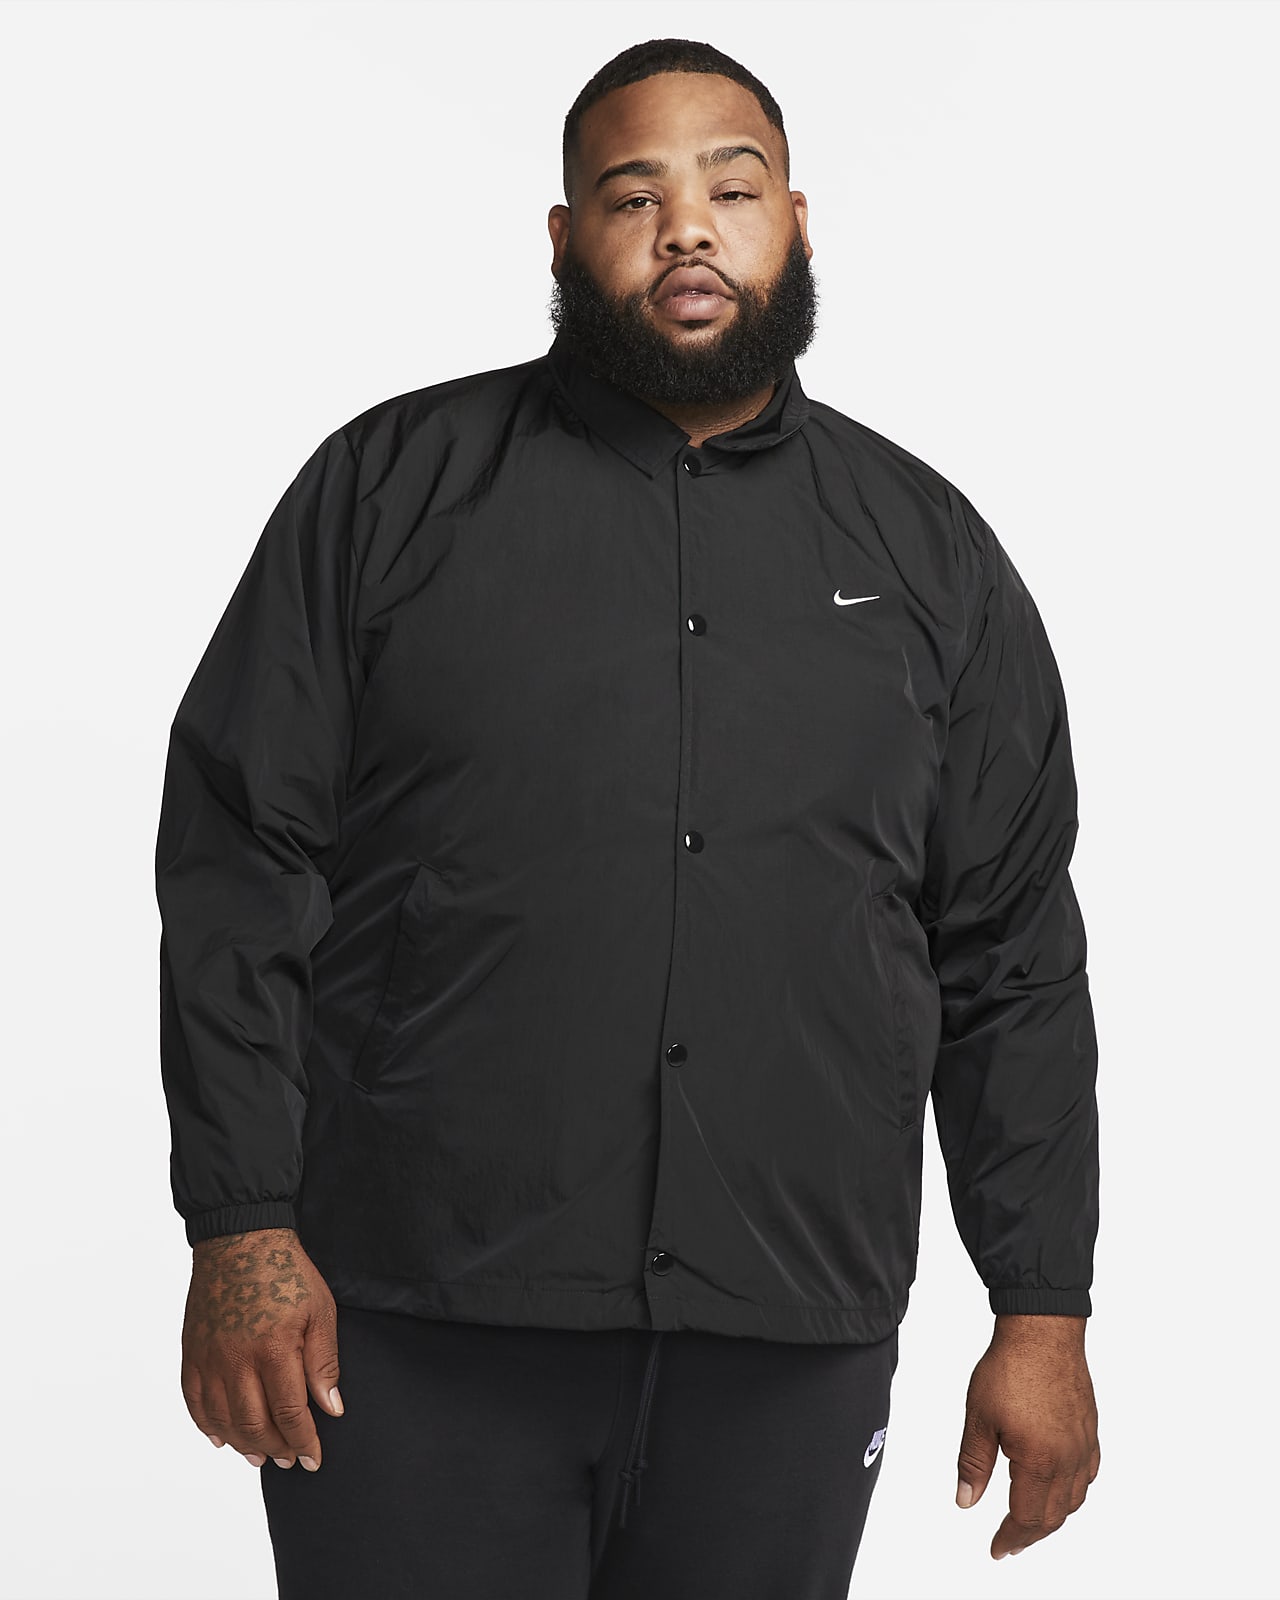 Nike Sportswear Authentics Men's Coaches Jacket